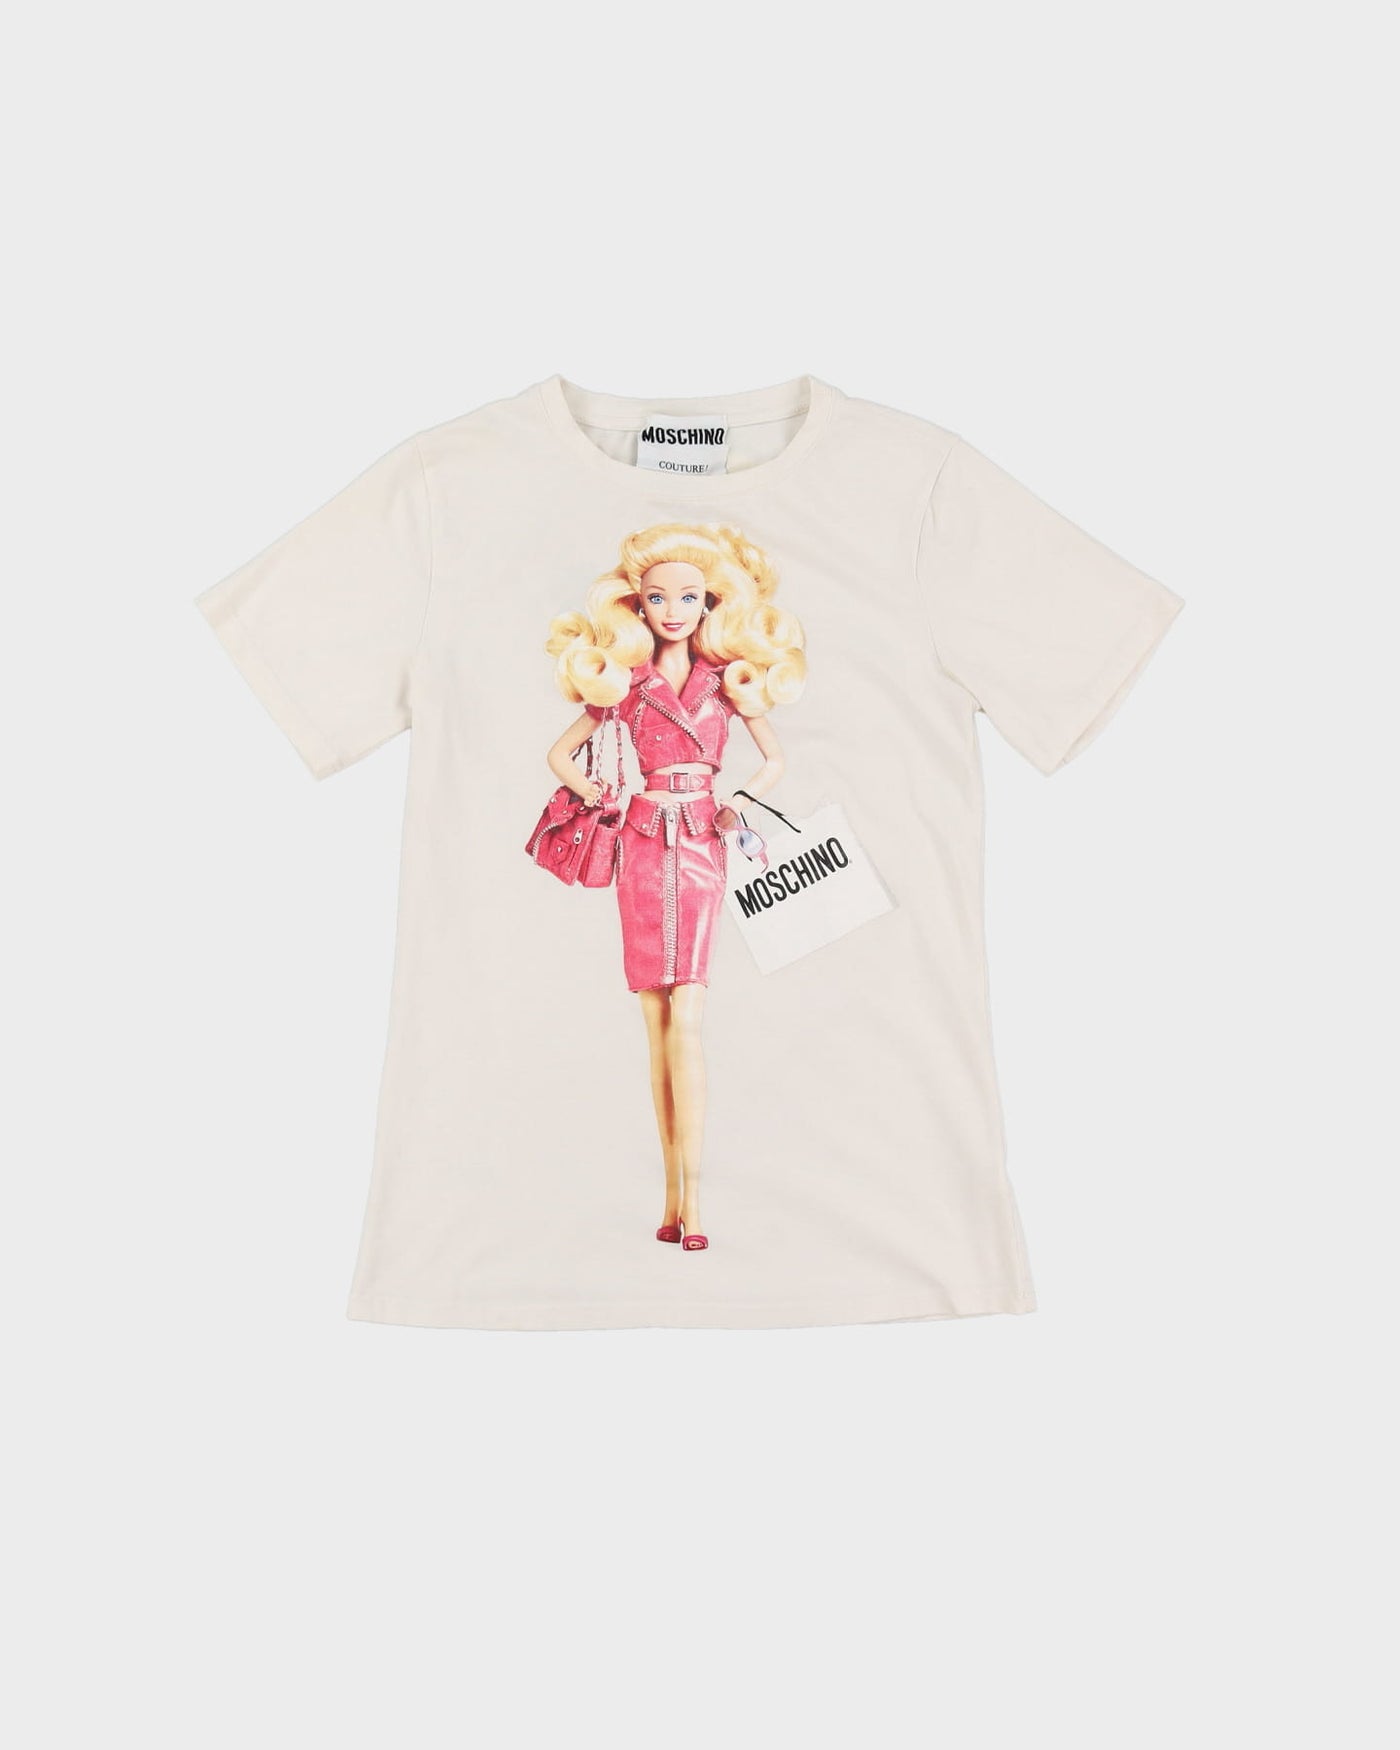 Moschino Couture X Jeremy Scott Barbie Print White Graphic T-Shirt - S